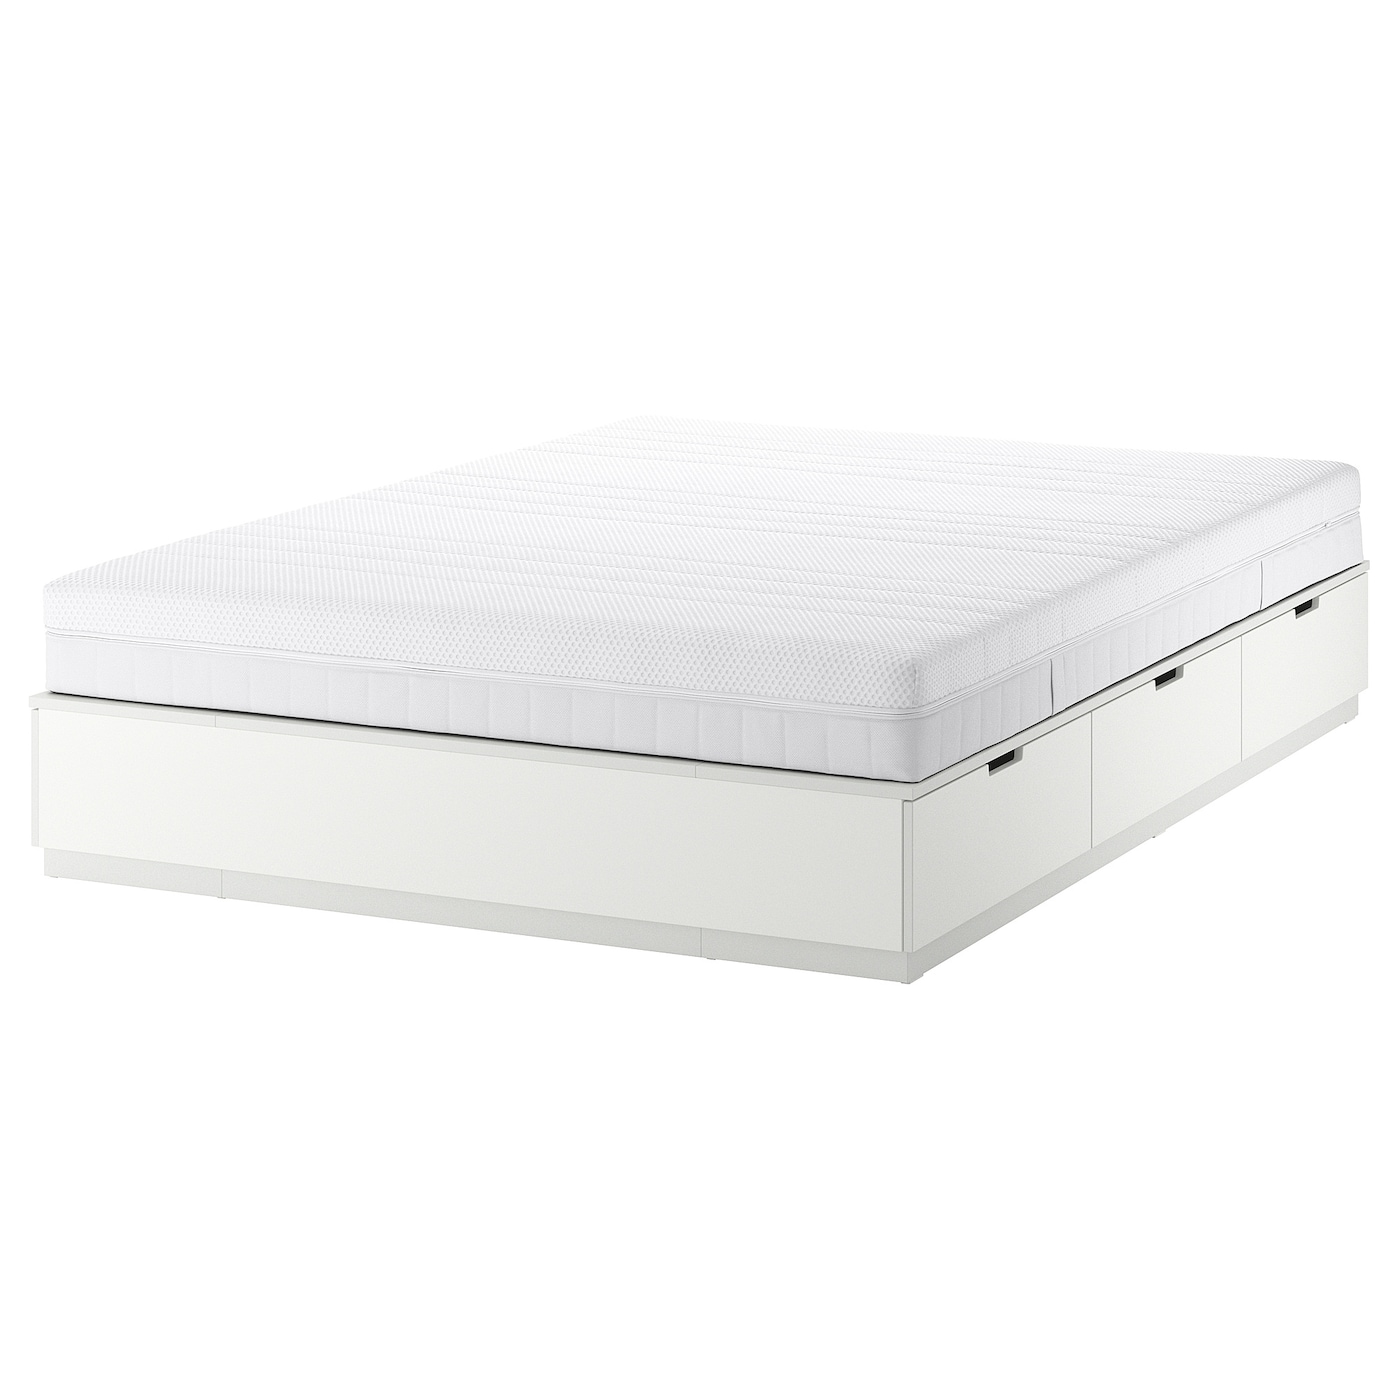 Каркас кровати с ящиком и матрасом - IKEA NORDLI, 200х160 см, матрас жесткий, белый, НОРДЛИ ИКЕА